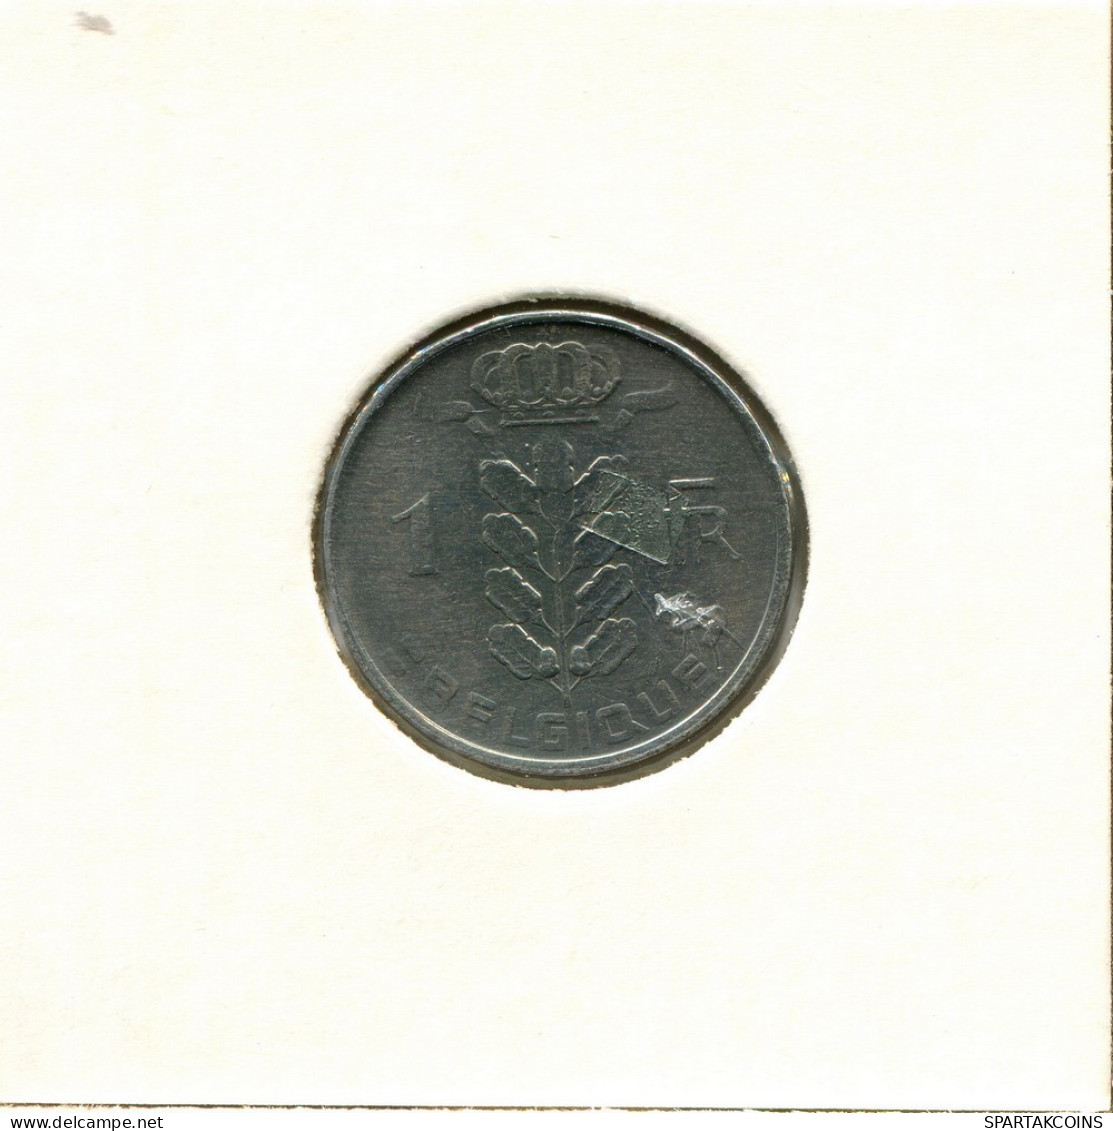 1 FRANC 1964 FRENCH Text BELGIUM Coin #BB301.U.A - 1 Franc